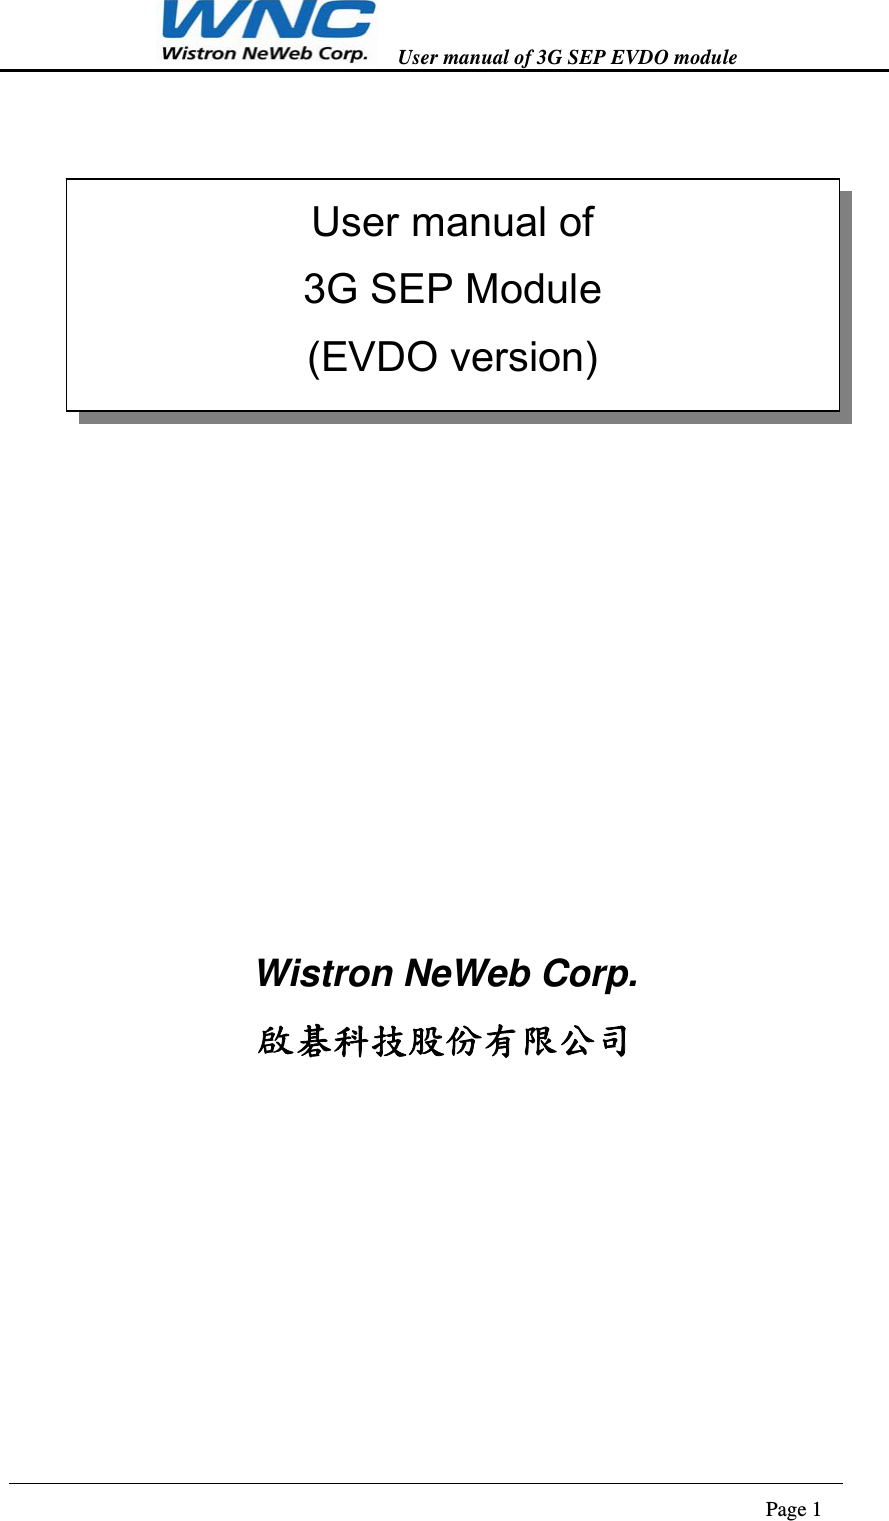   User manual of 3G SEP EVDO module                                                                      Page 1           Wistron NeWeb Corp. 啟碁科技股份有限公司             User manual of   3G SEP Module (EVDO version) 